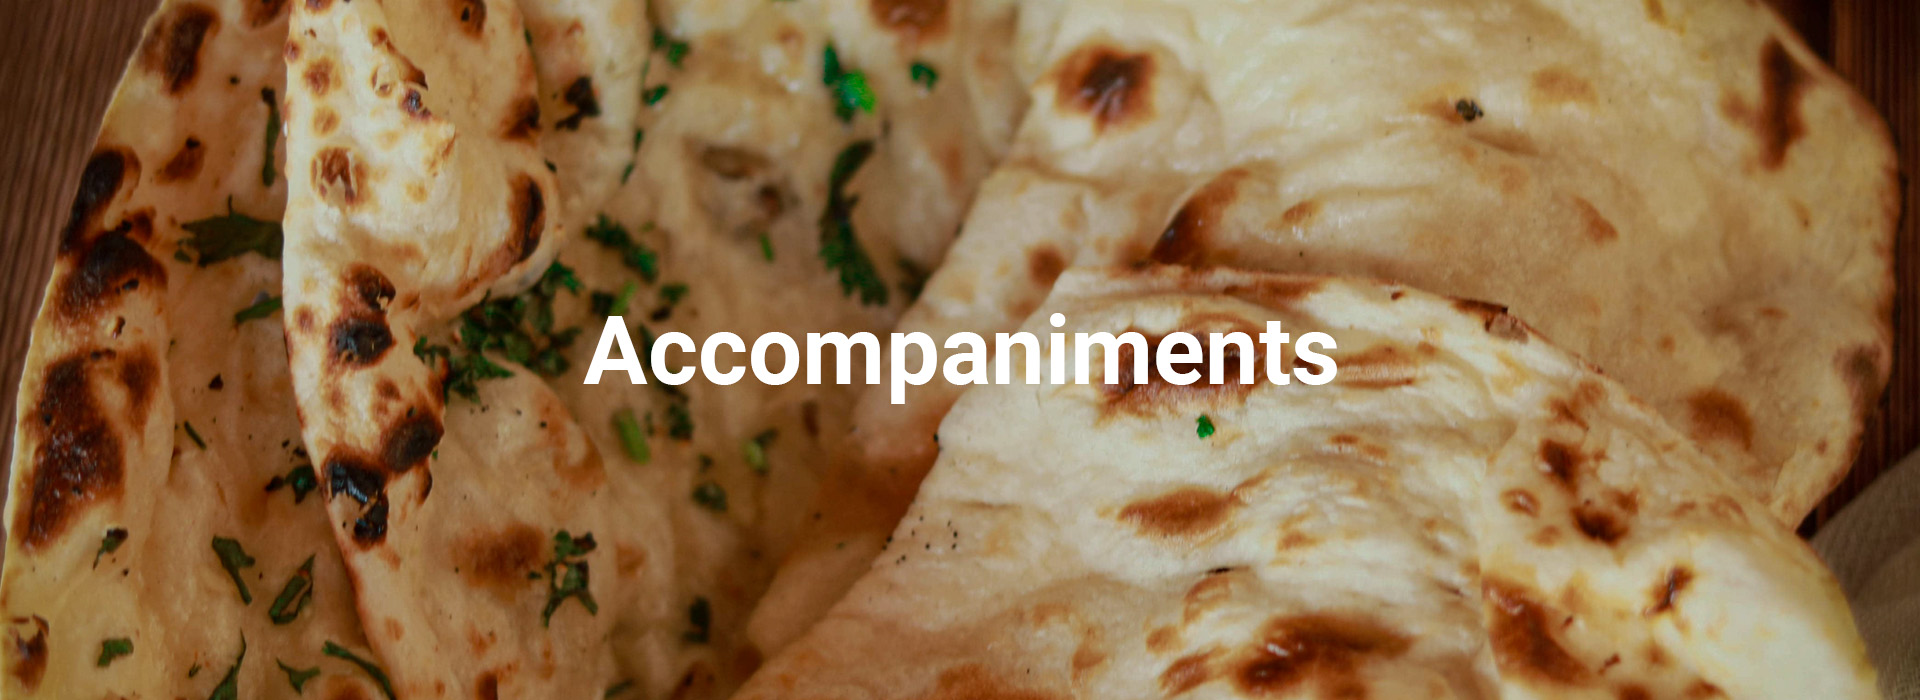 Indian-food-accompaniments-menu-banner-odesi-aroma (9)